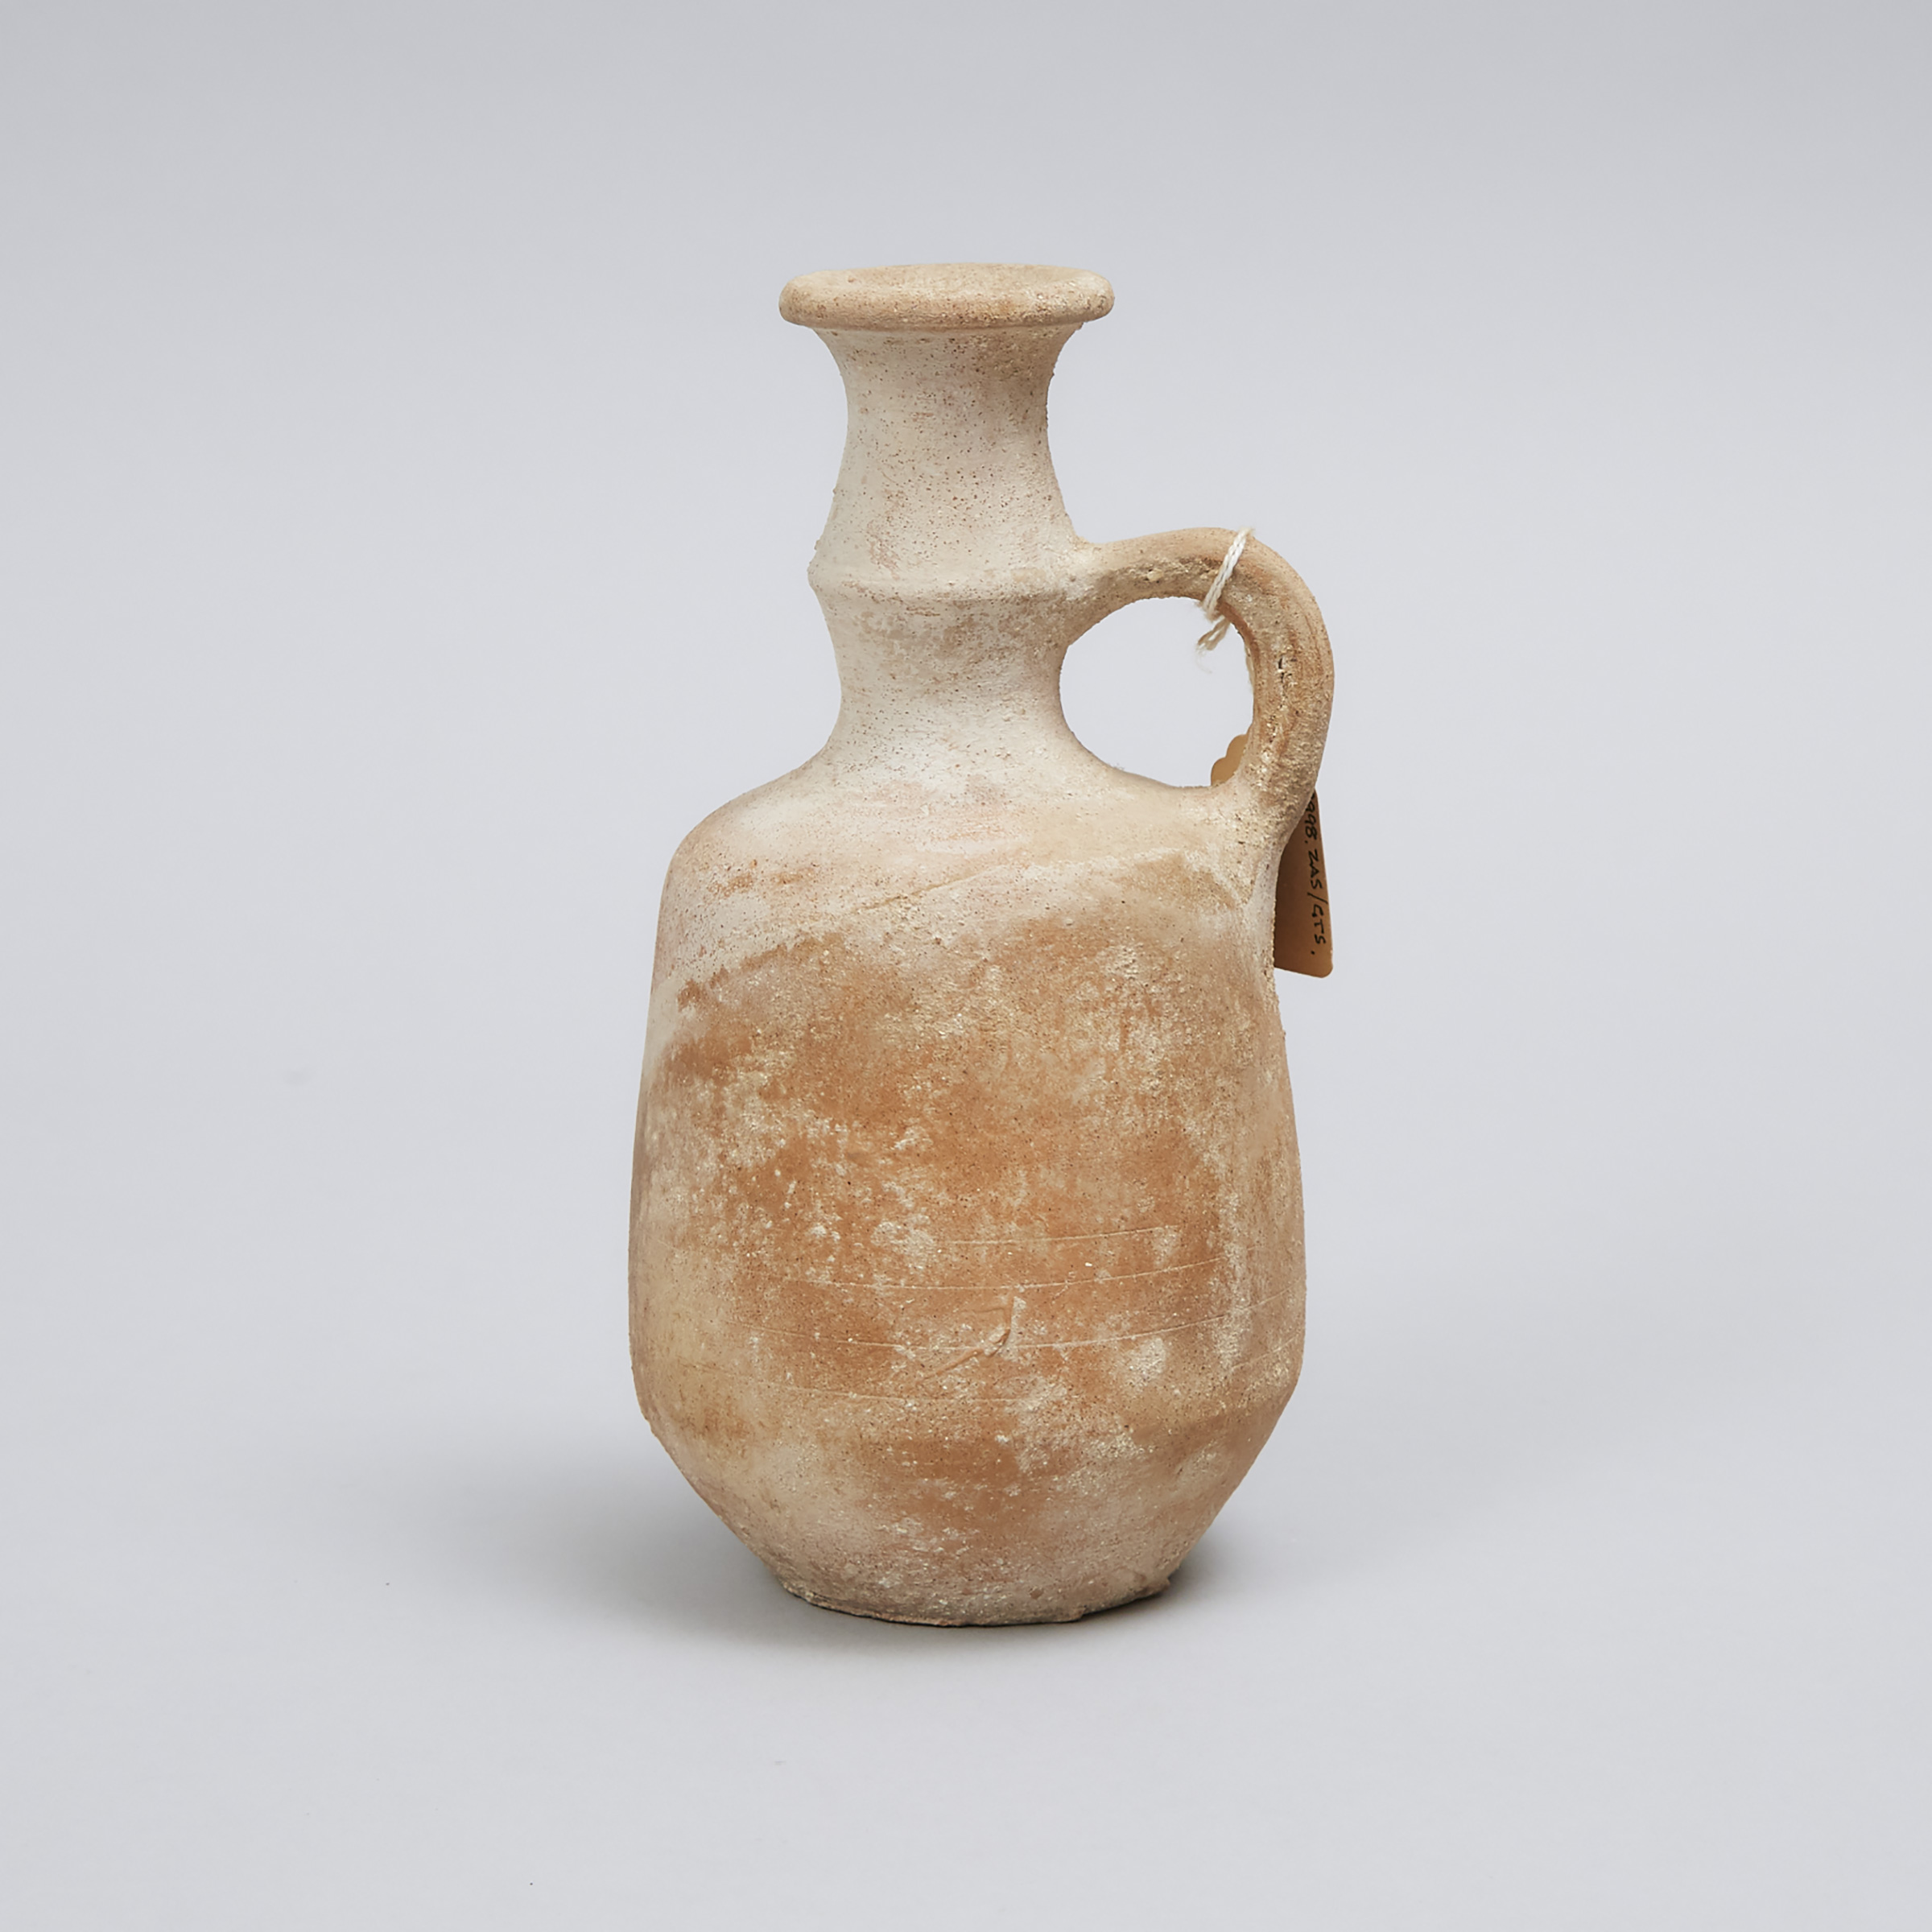  Cypro-Phoenician Pottery Jug, 400-300 B.C.